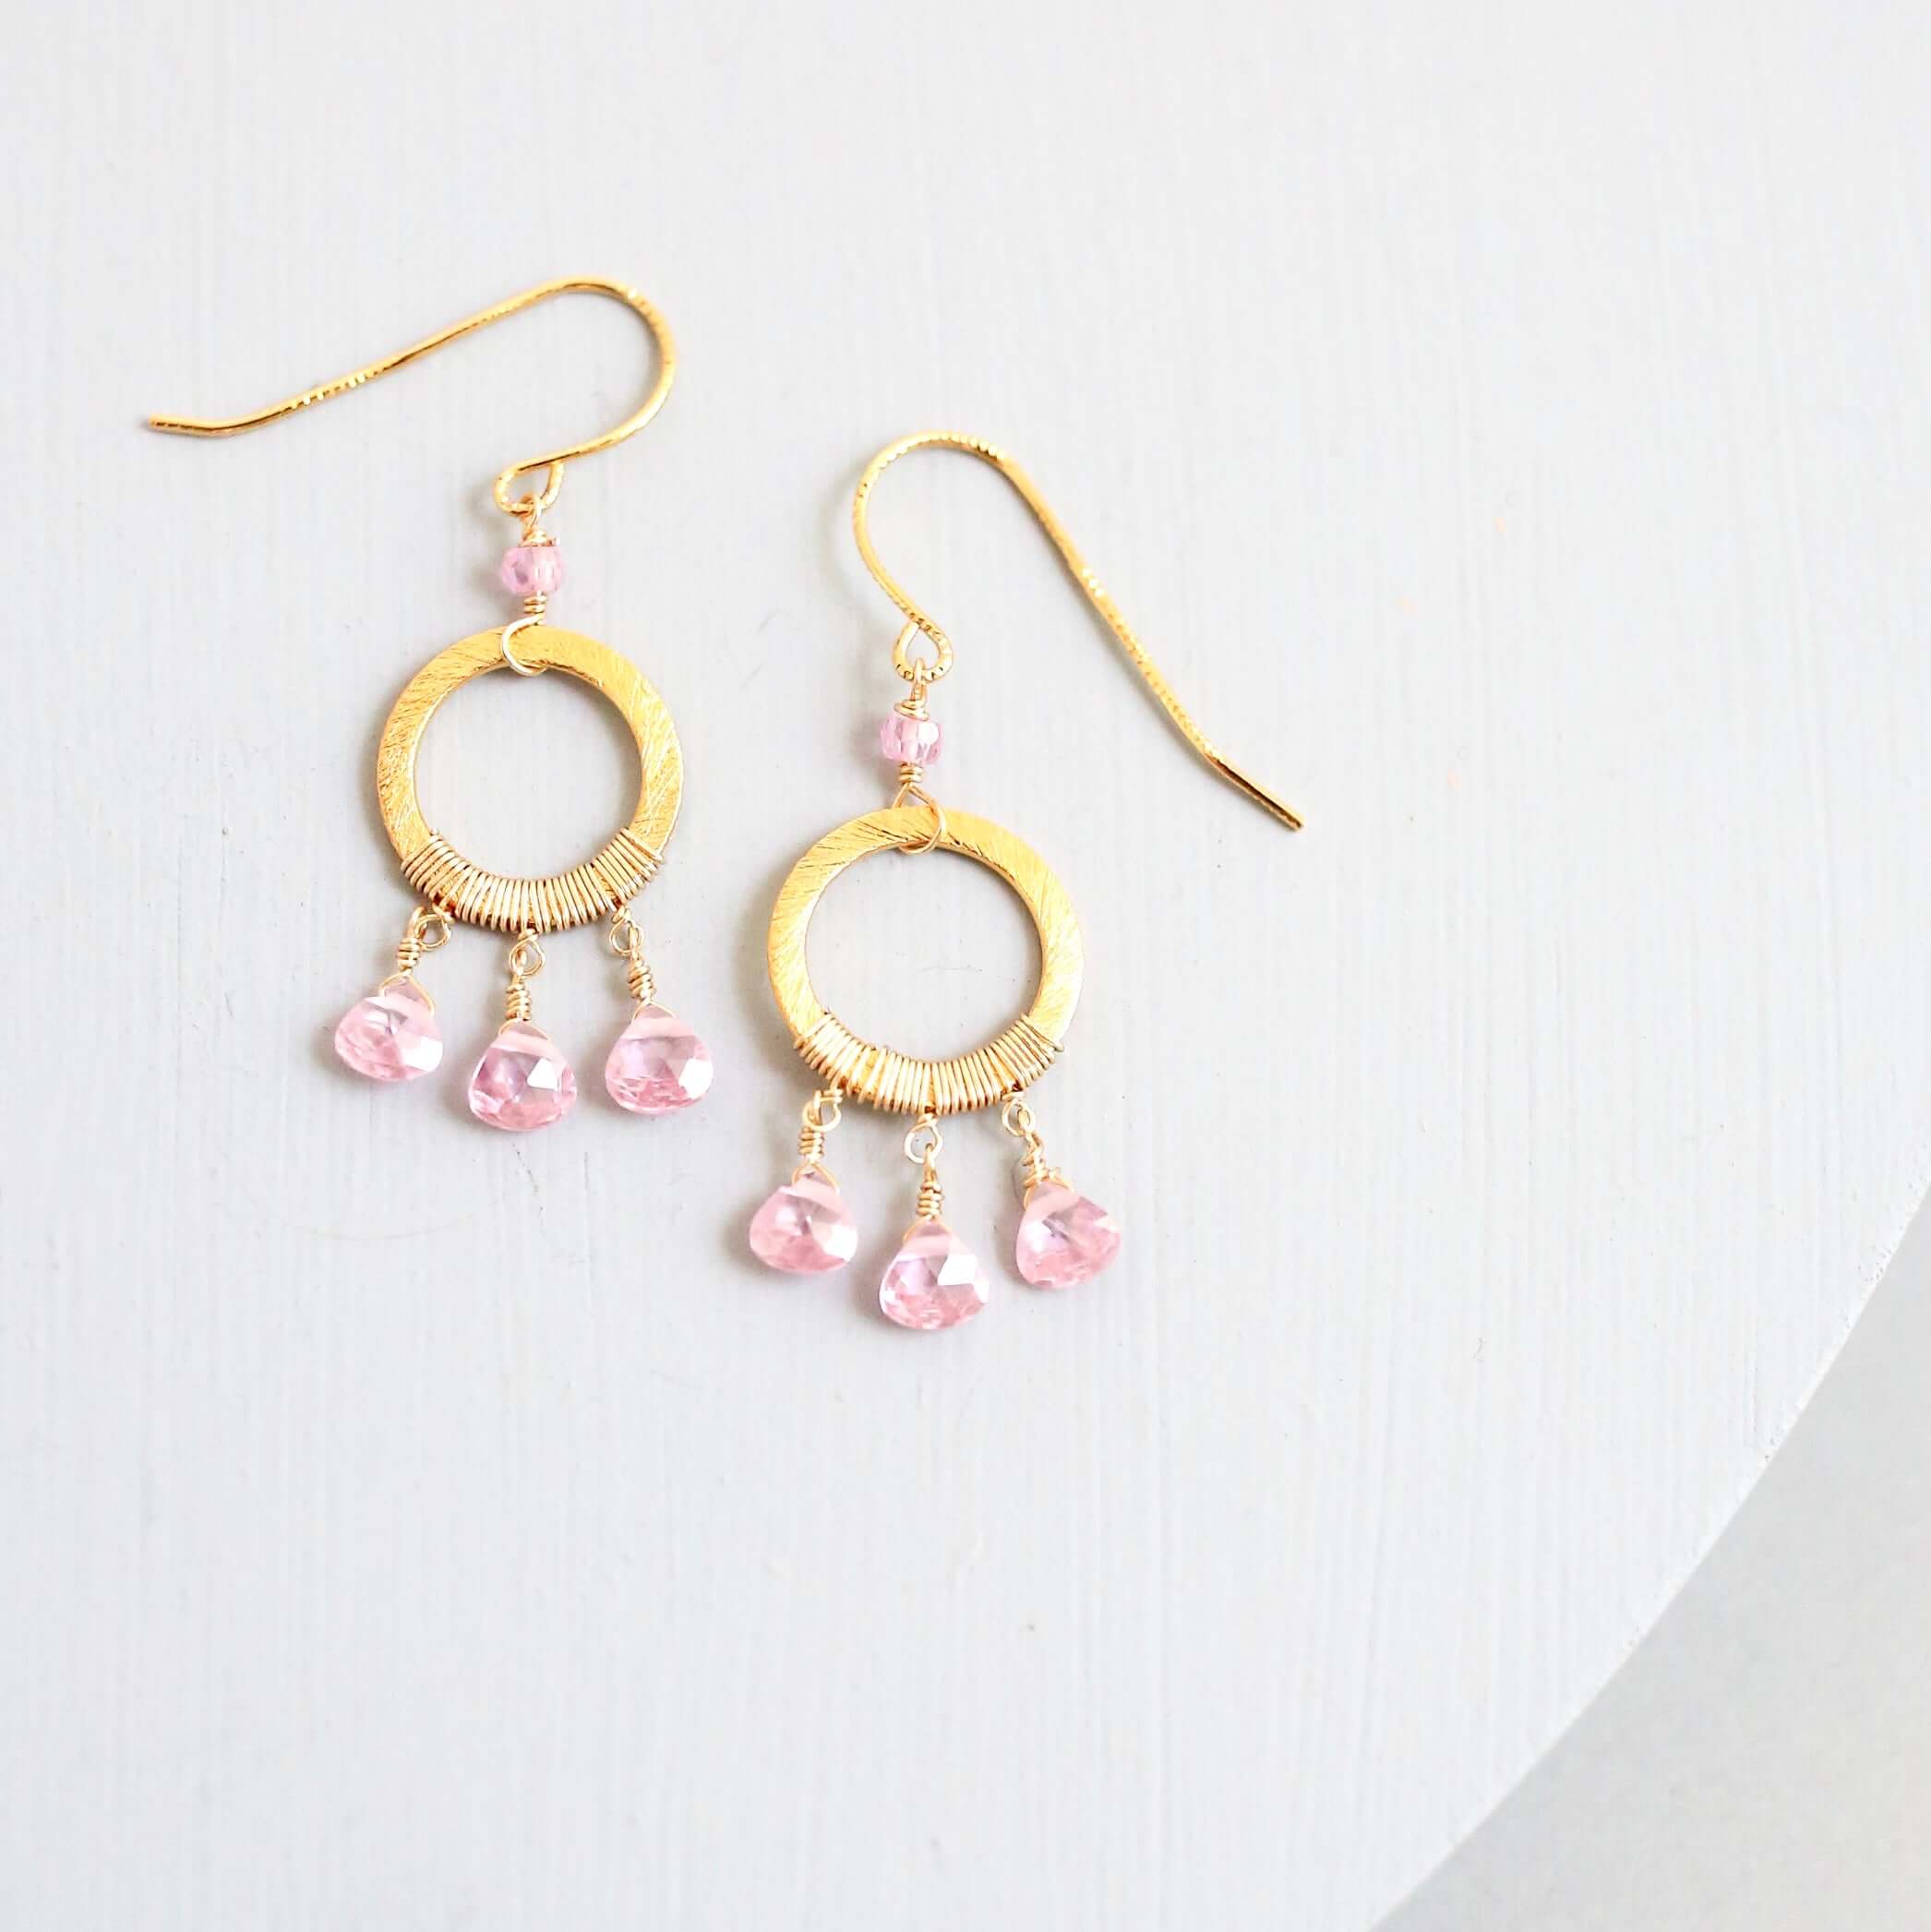 Boho Mini Dream Catcher Earrings with Rose Quartz Gemstones